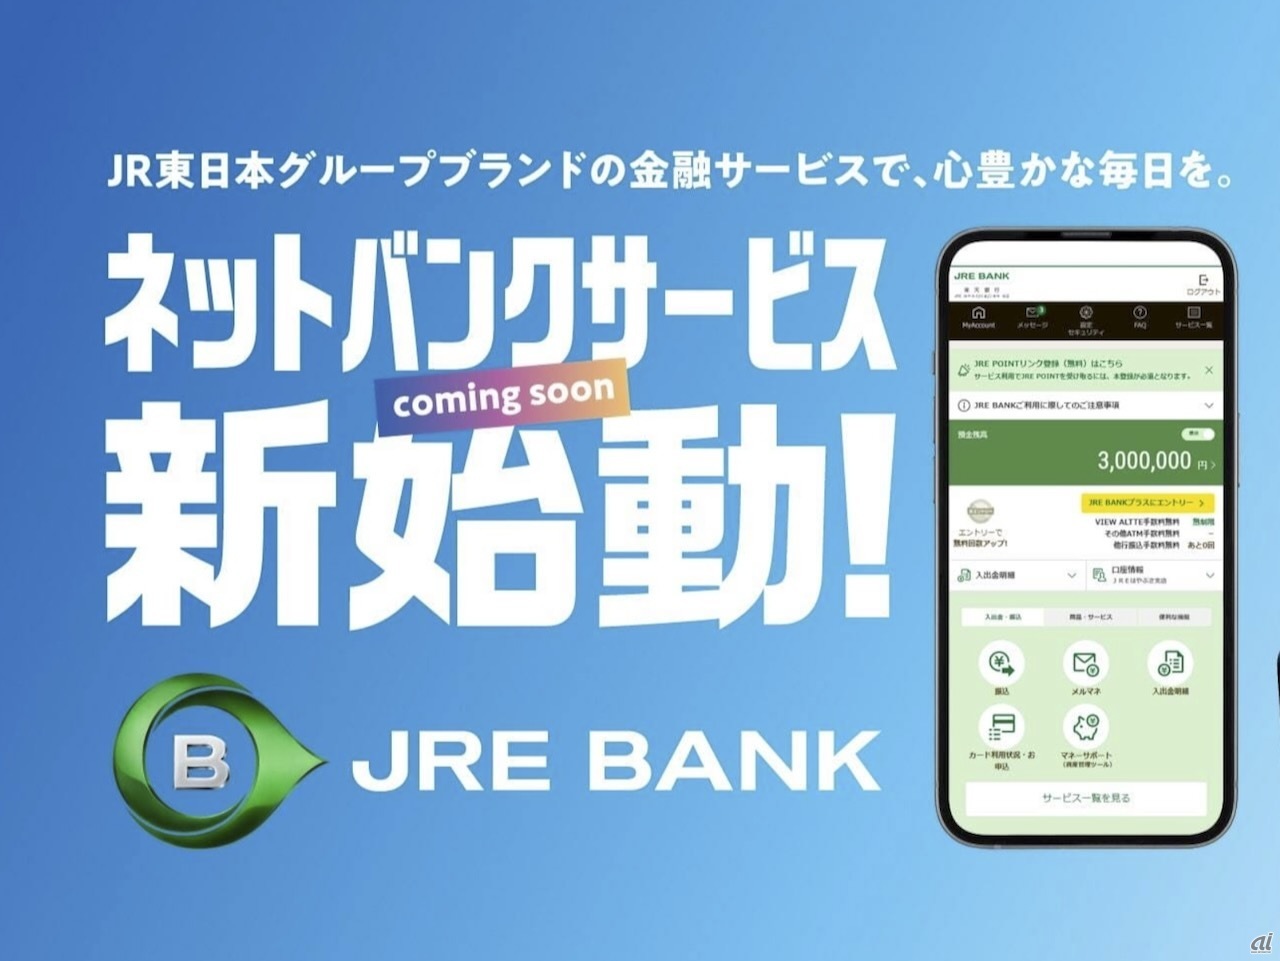 JR東日本のネット銀行「JRE BANK」5月始動--楽天銀と提携、グリーン車無料の特典も